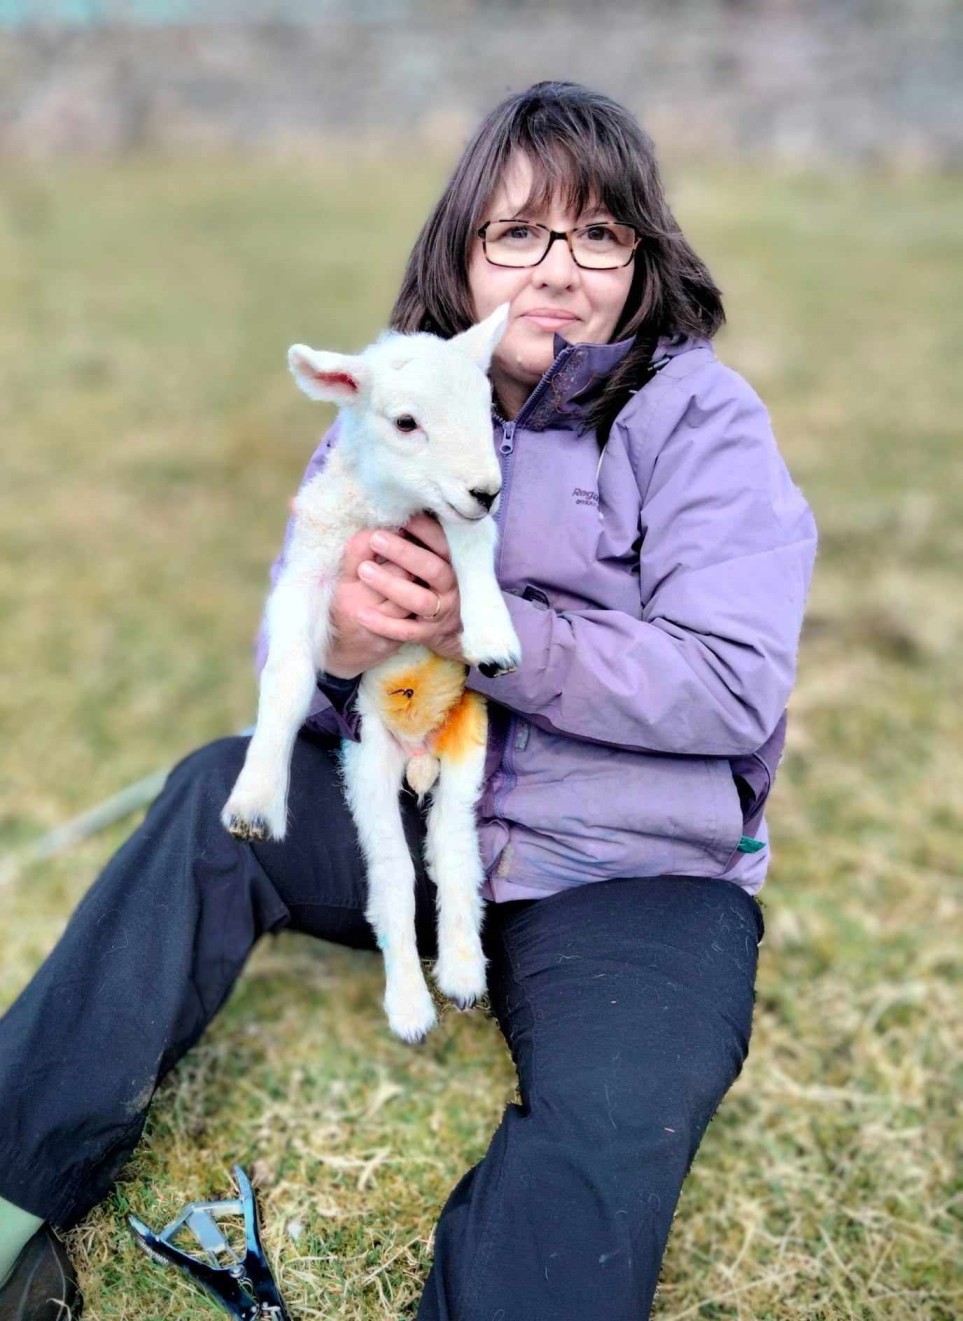 Andrea with a lamb